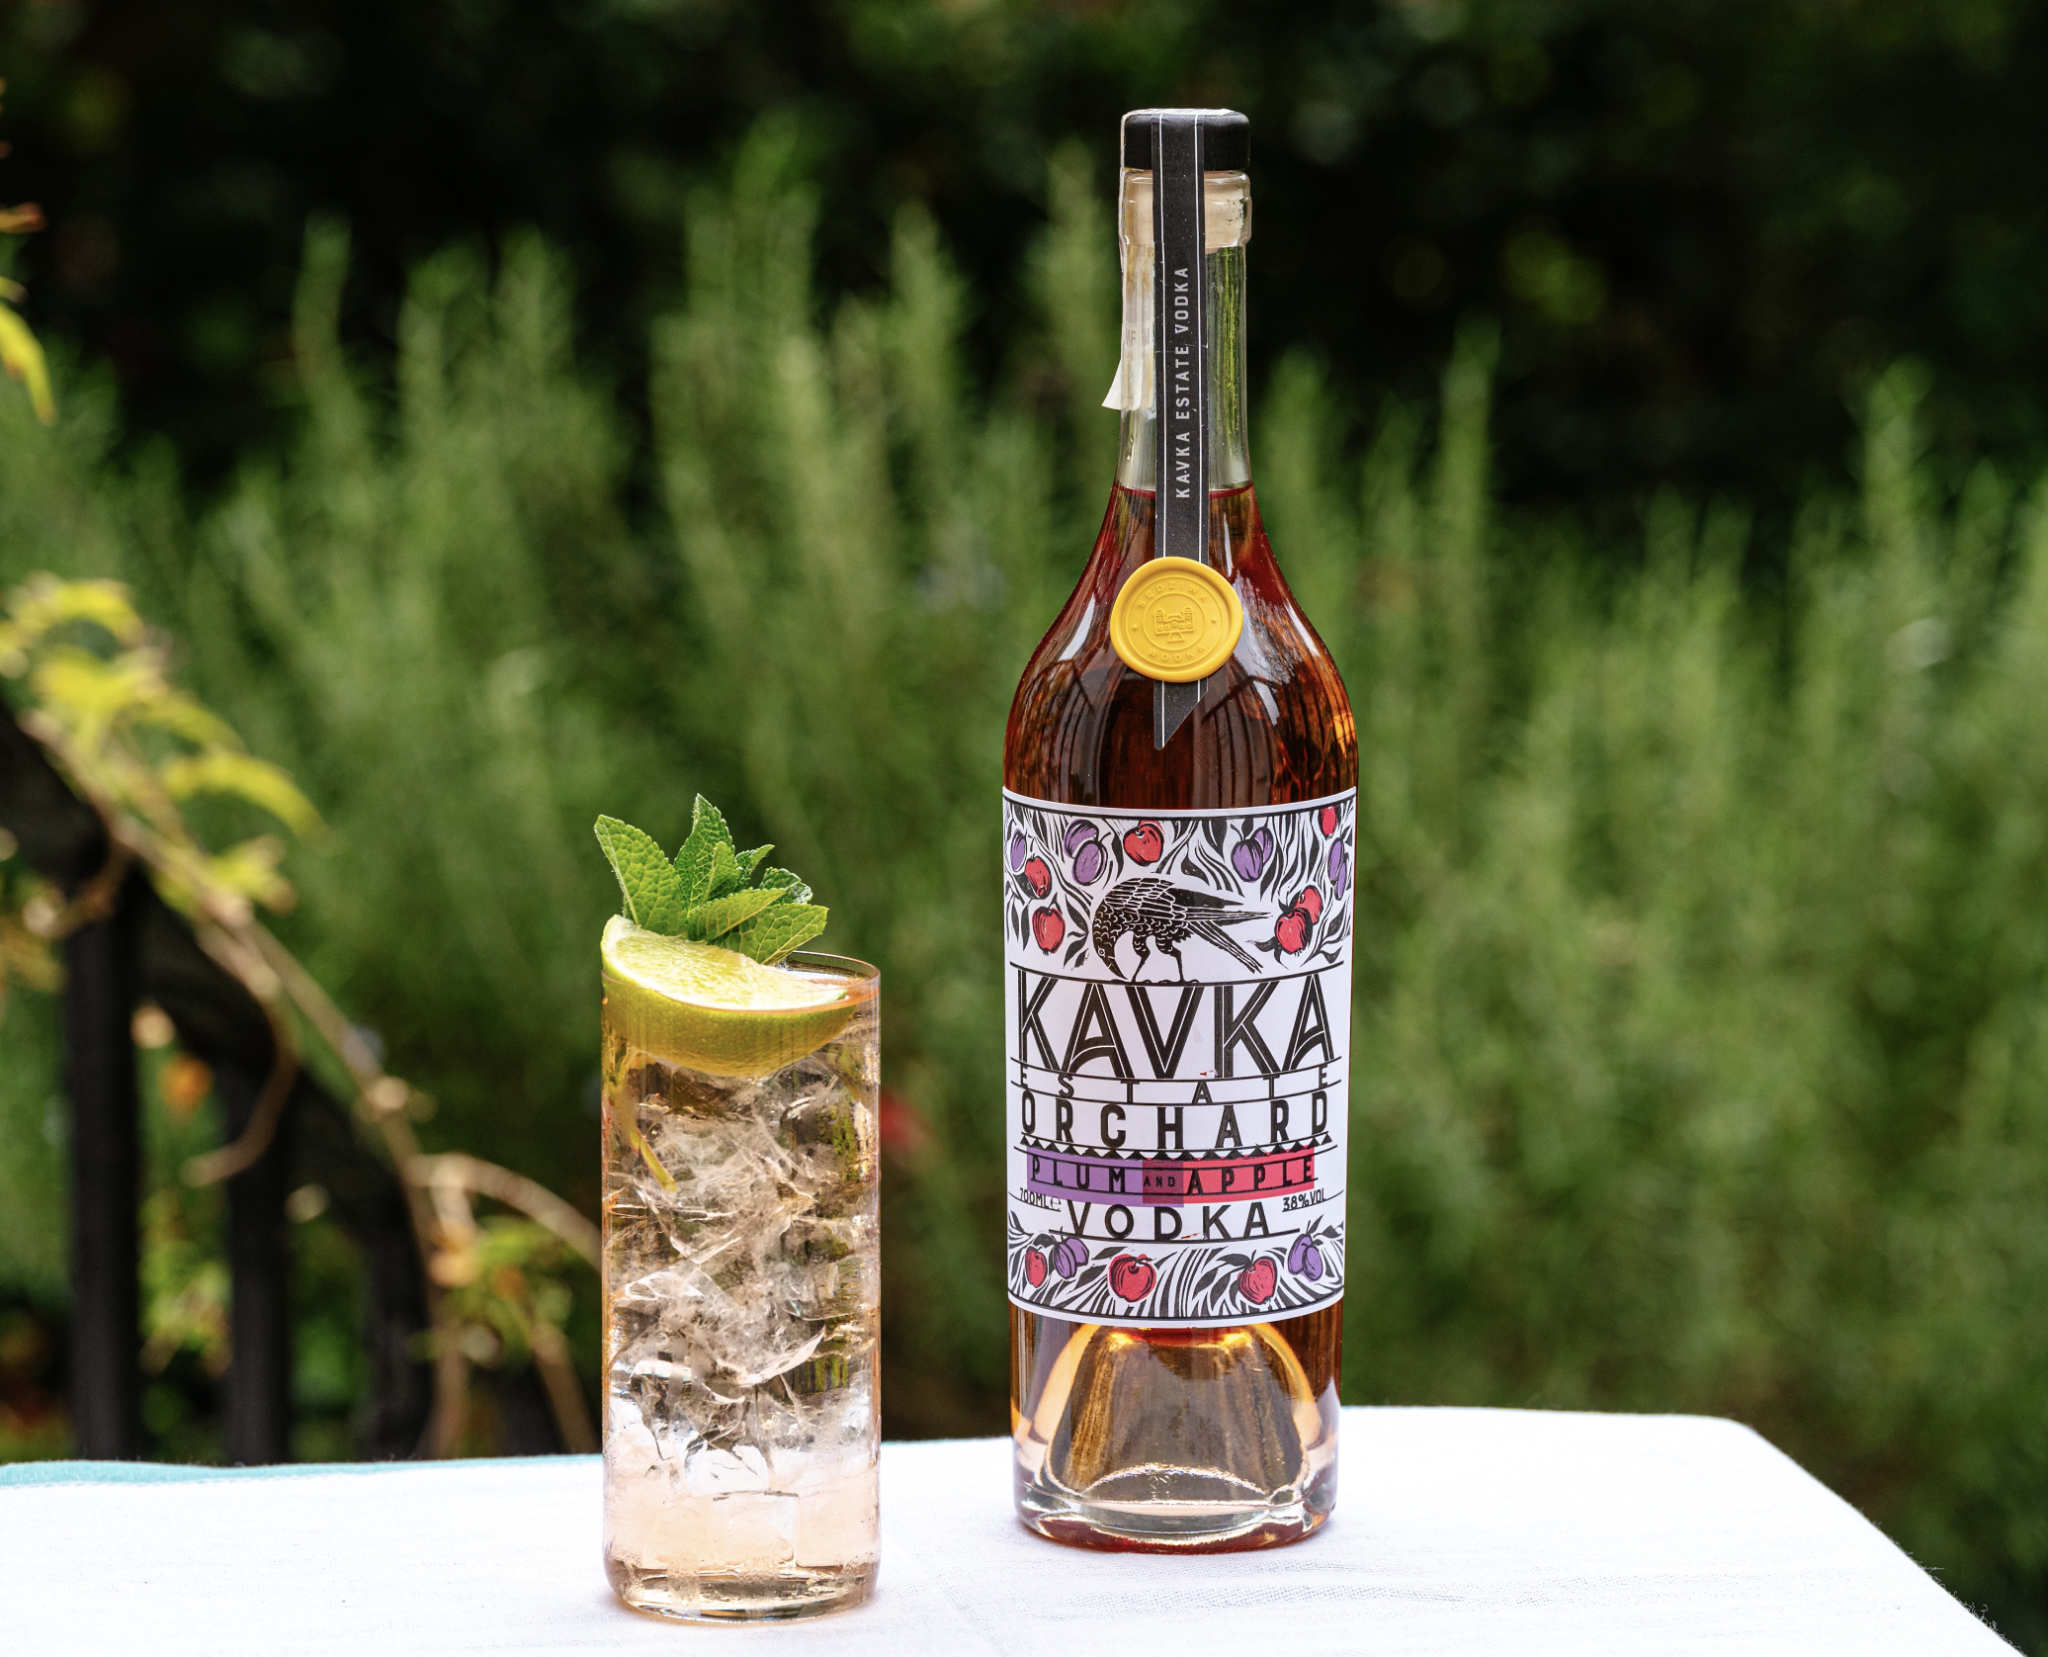 Kavka Vodka Expands its Range with the Launch of Kavka Orchard